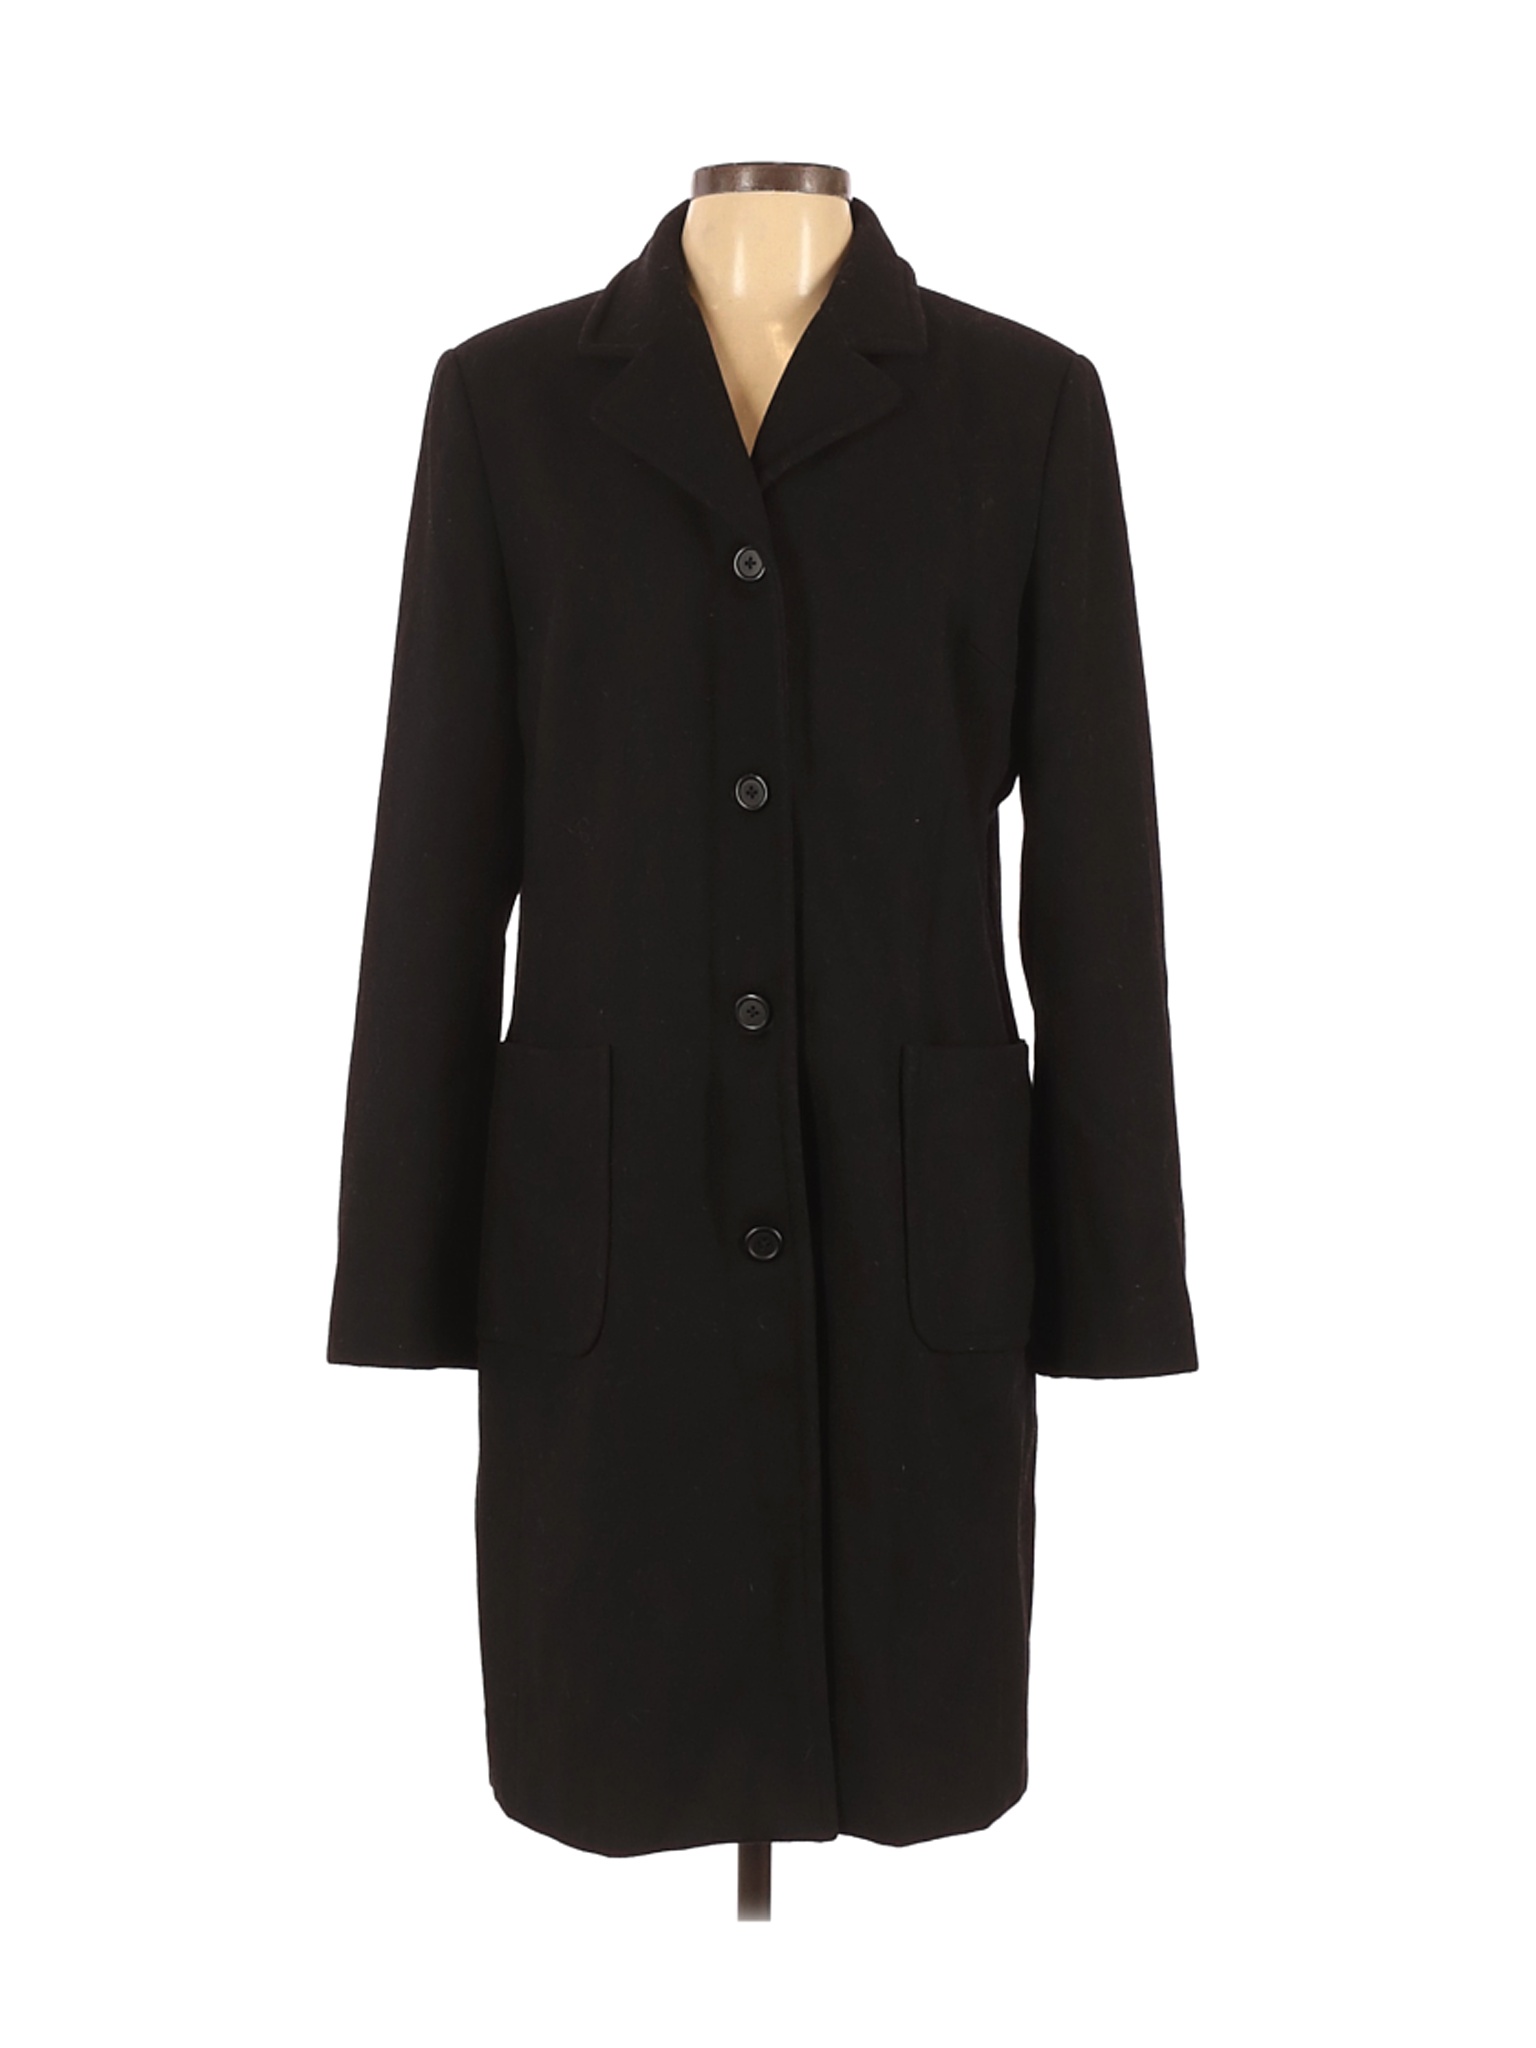 J.Crew Factory Store Women Black Wool Coat L | eBay